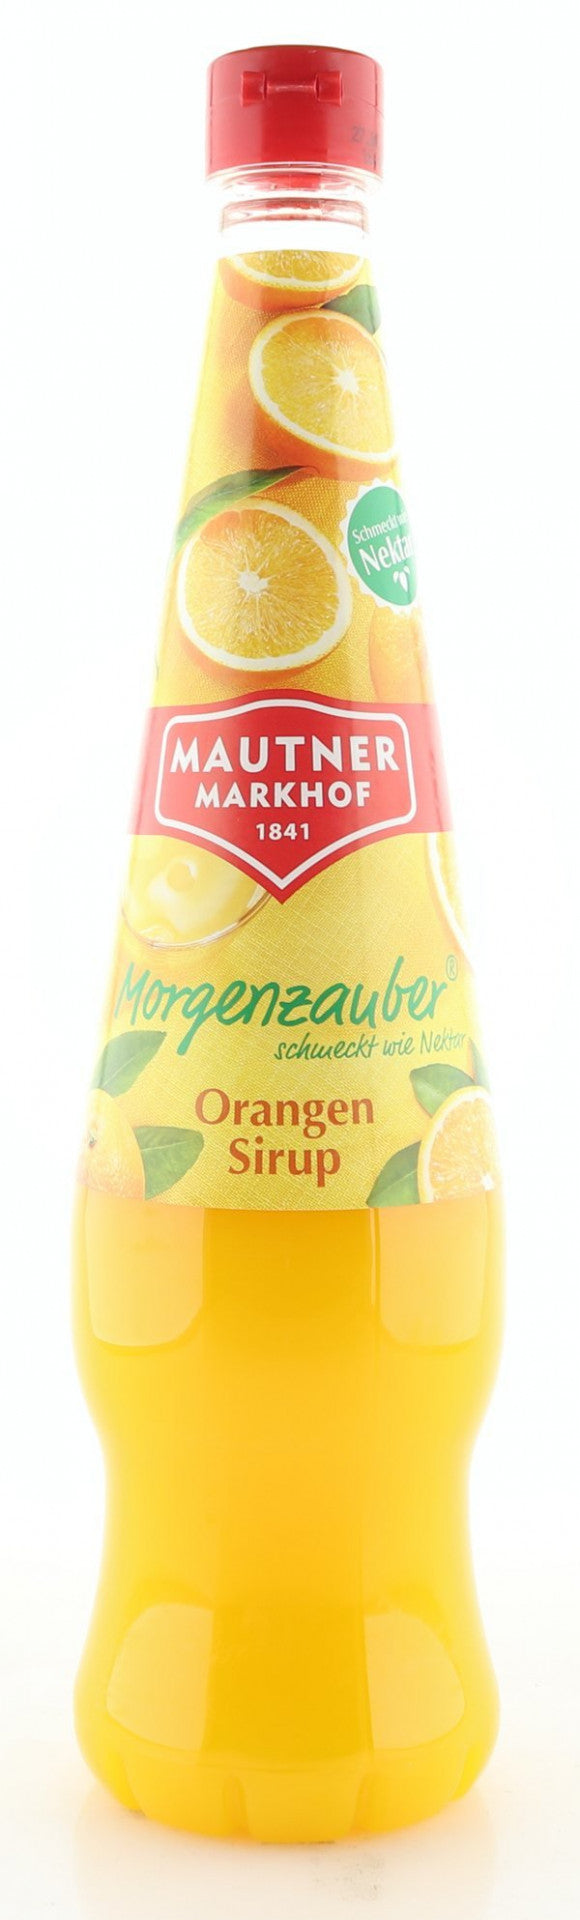 Mautner Markhof Morgenzauber Sirup Orange